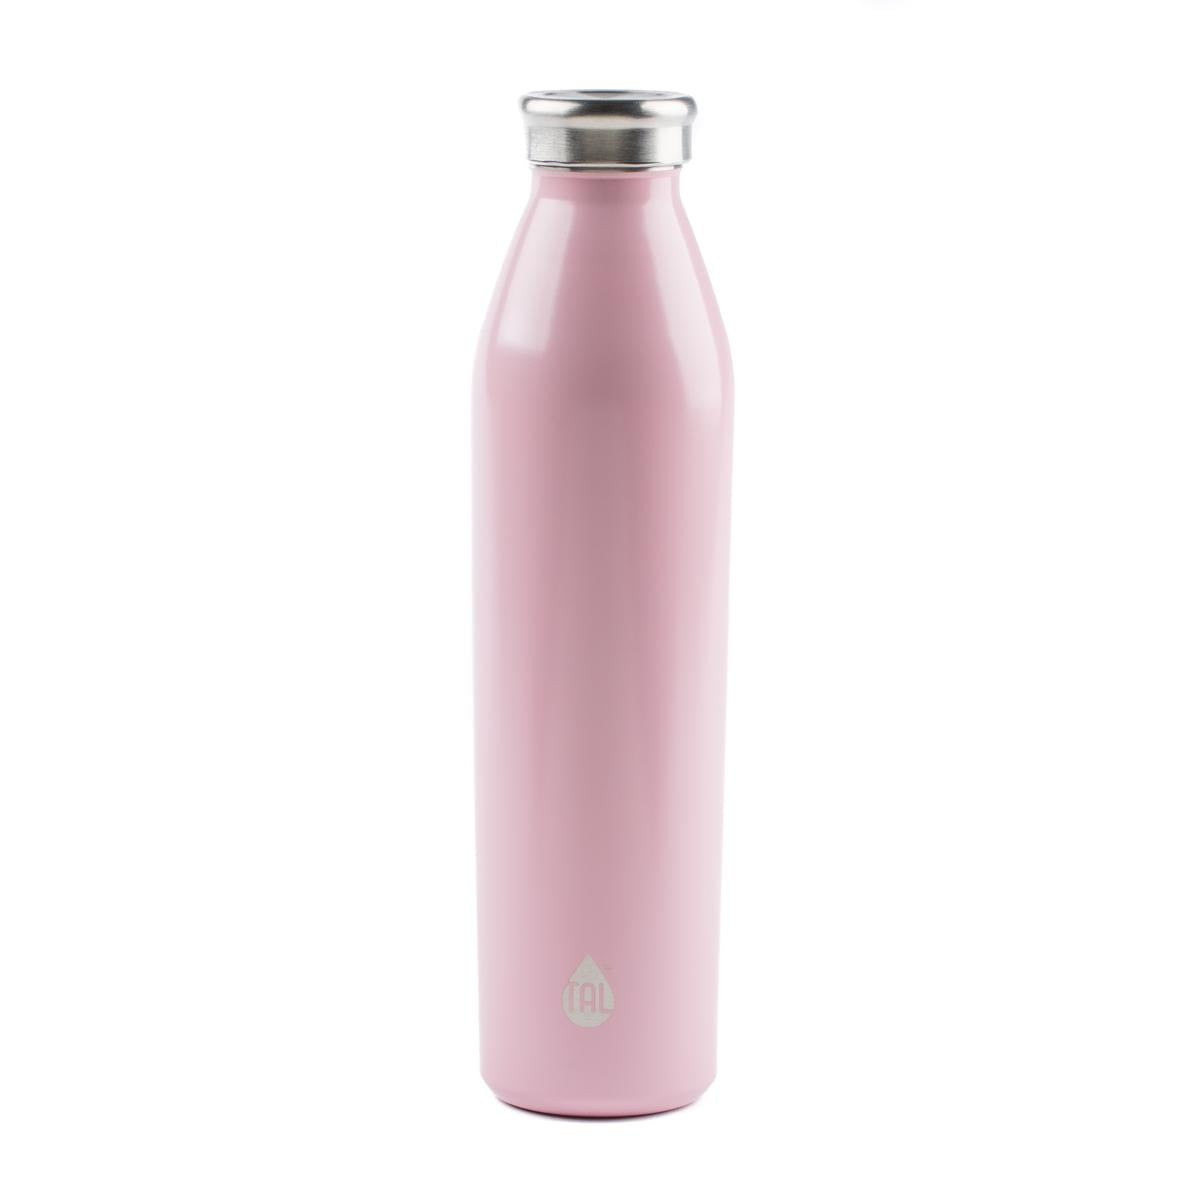 20 oz Modern Loop Bottles – TAL™ Hydration